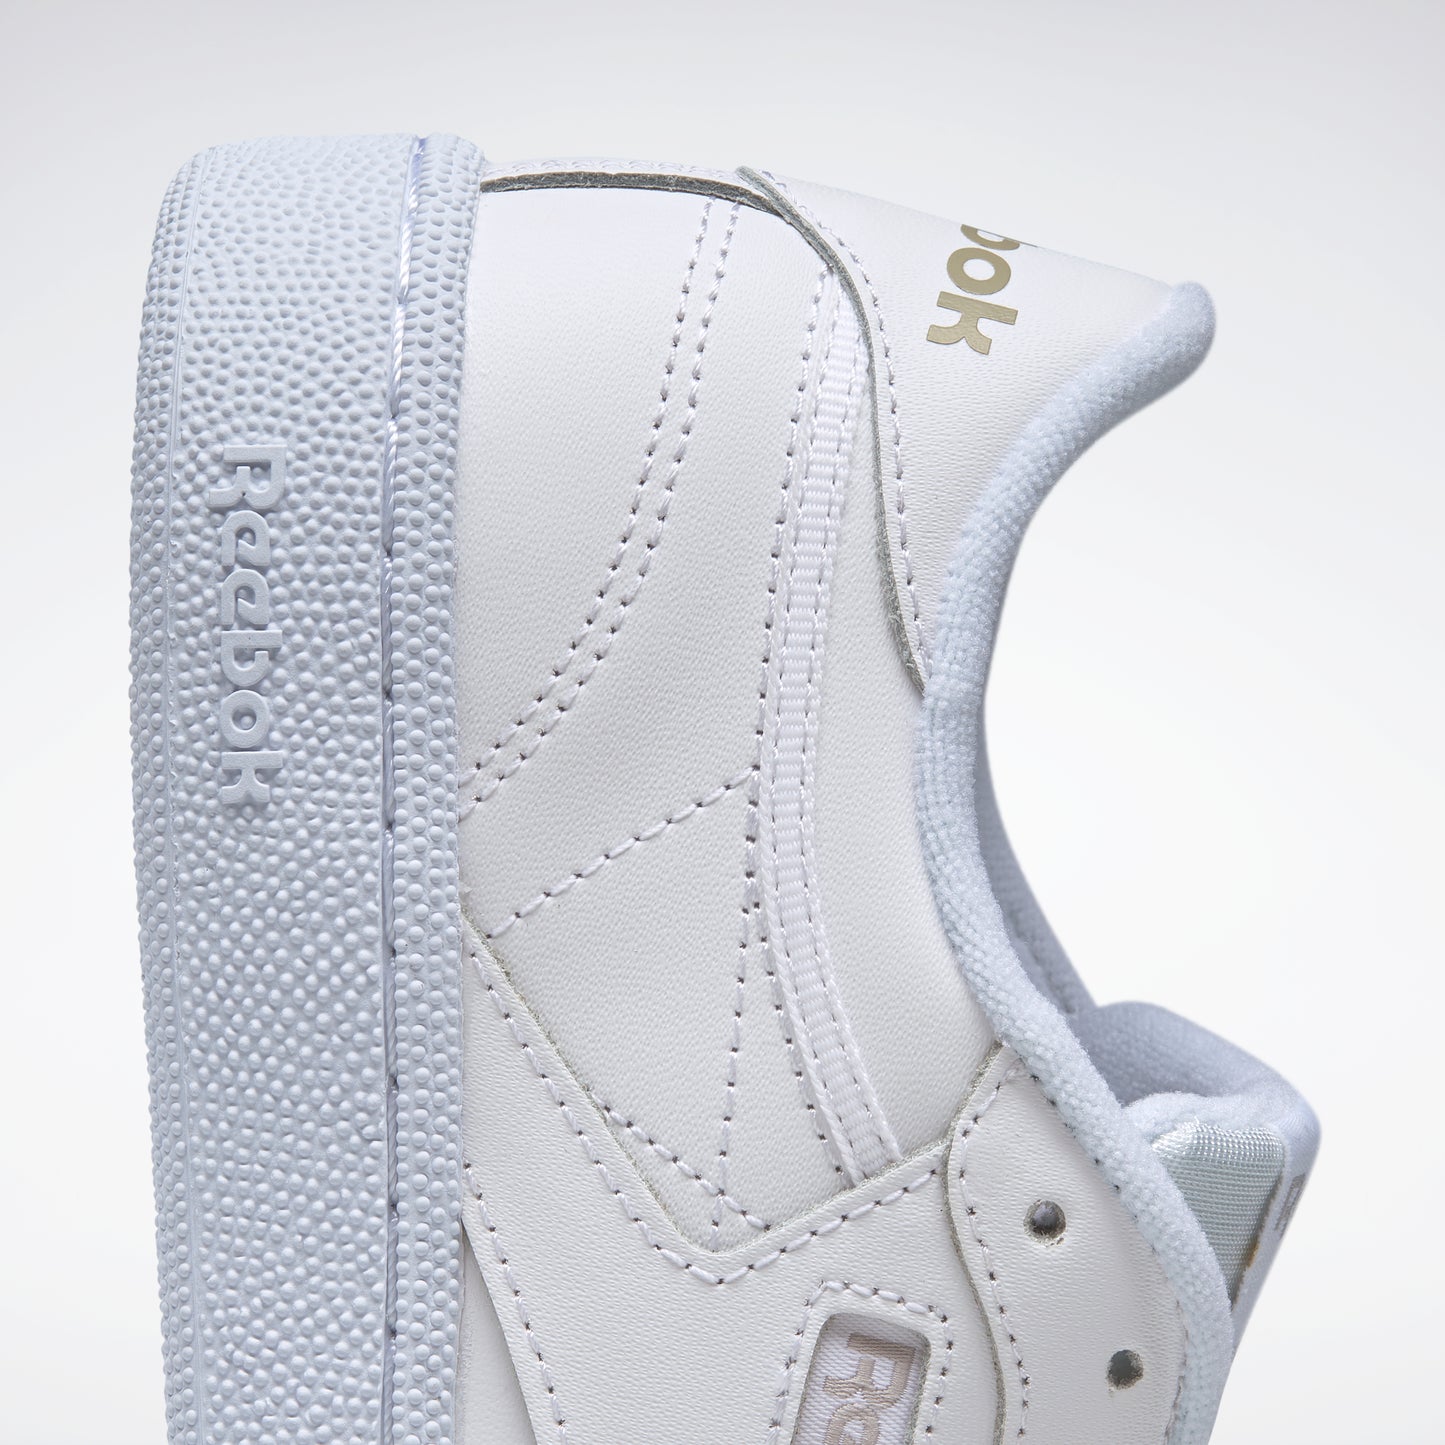 Club C 85 Shoes White/Light Grey